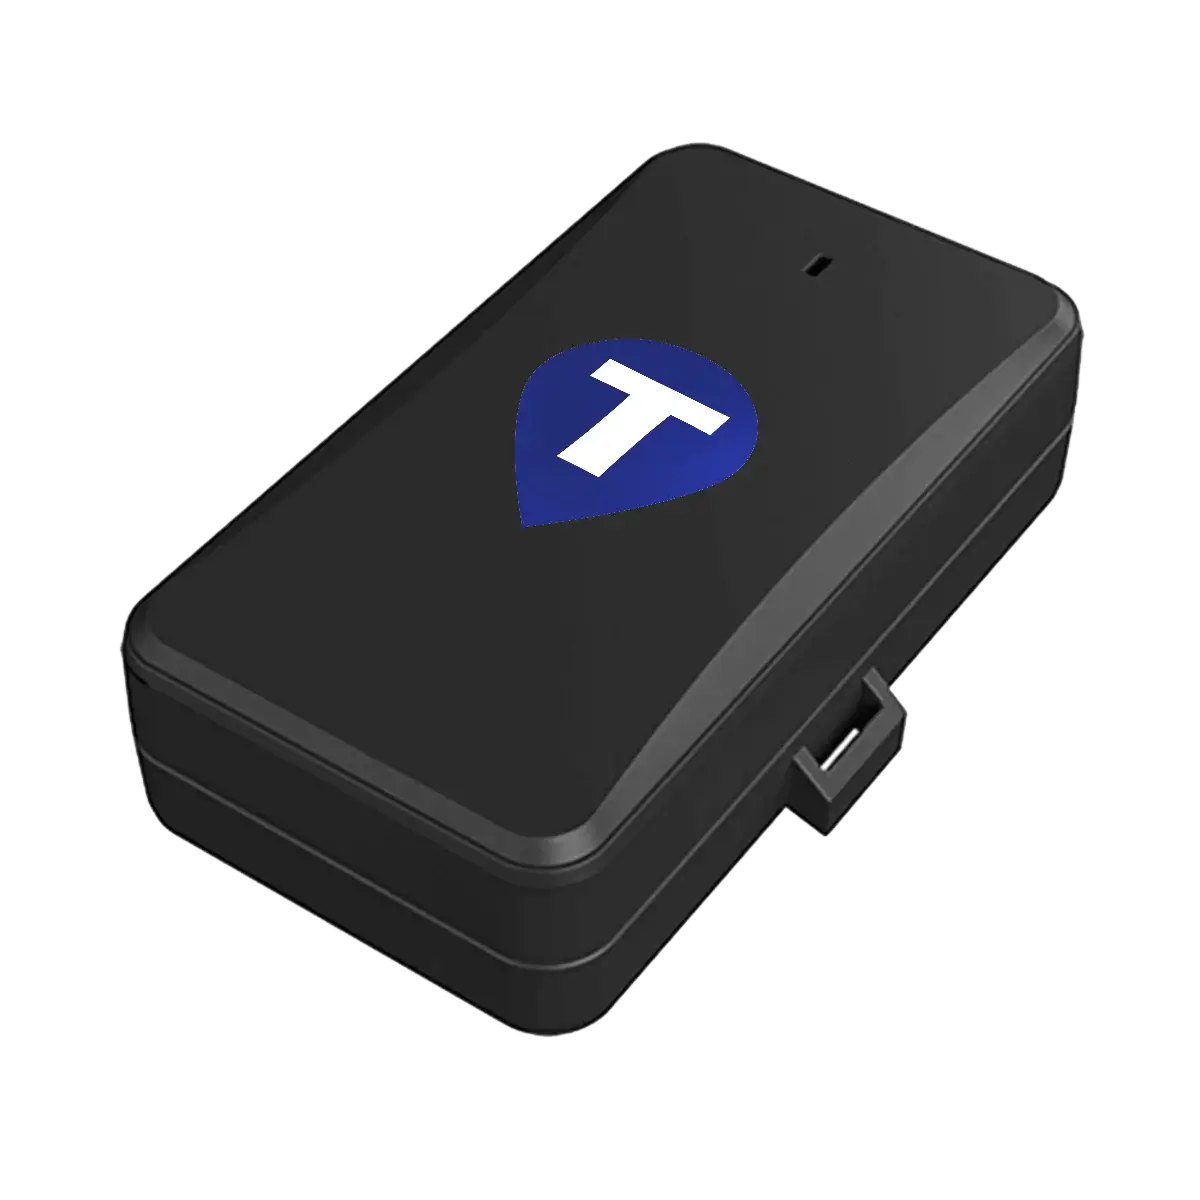 Trackem GPS MagTracker modem with signature T sticker